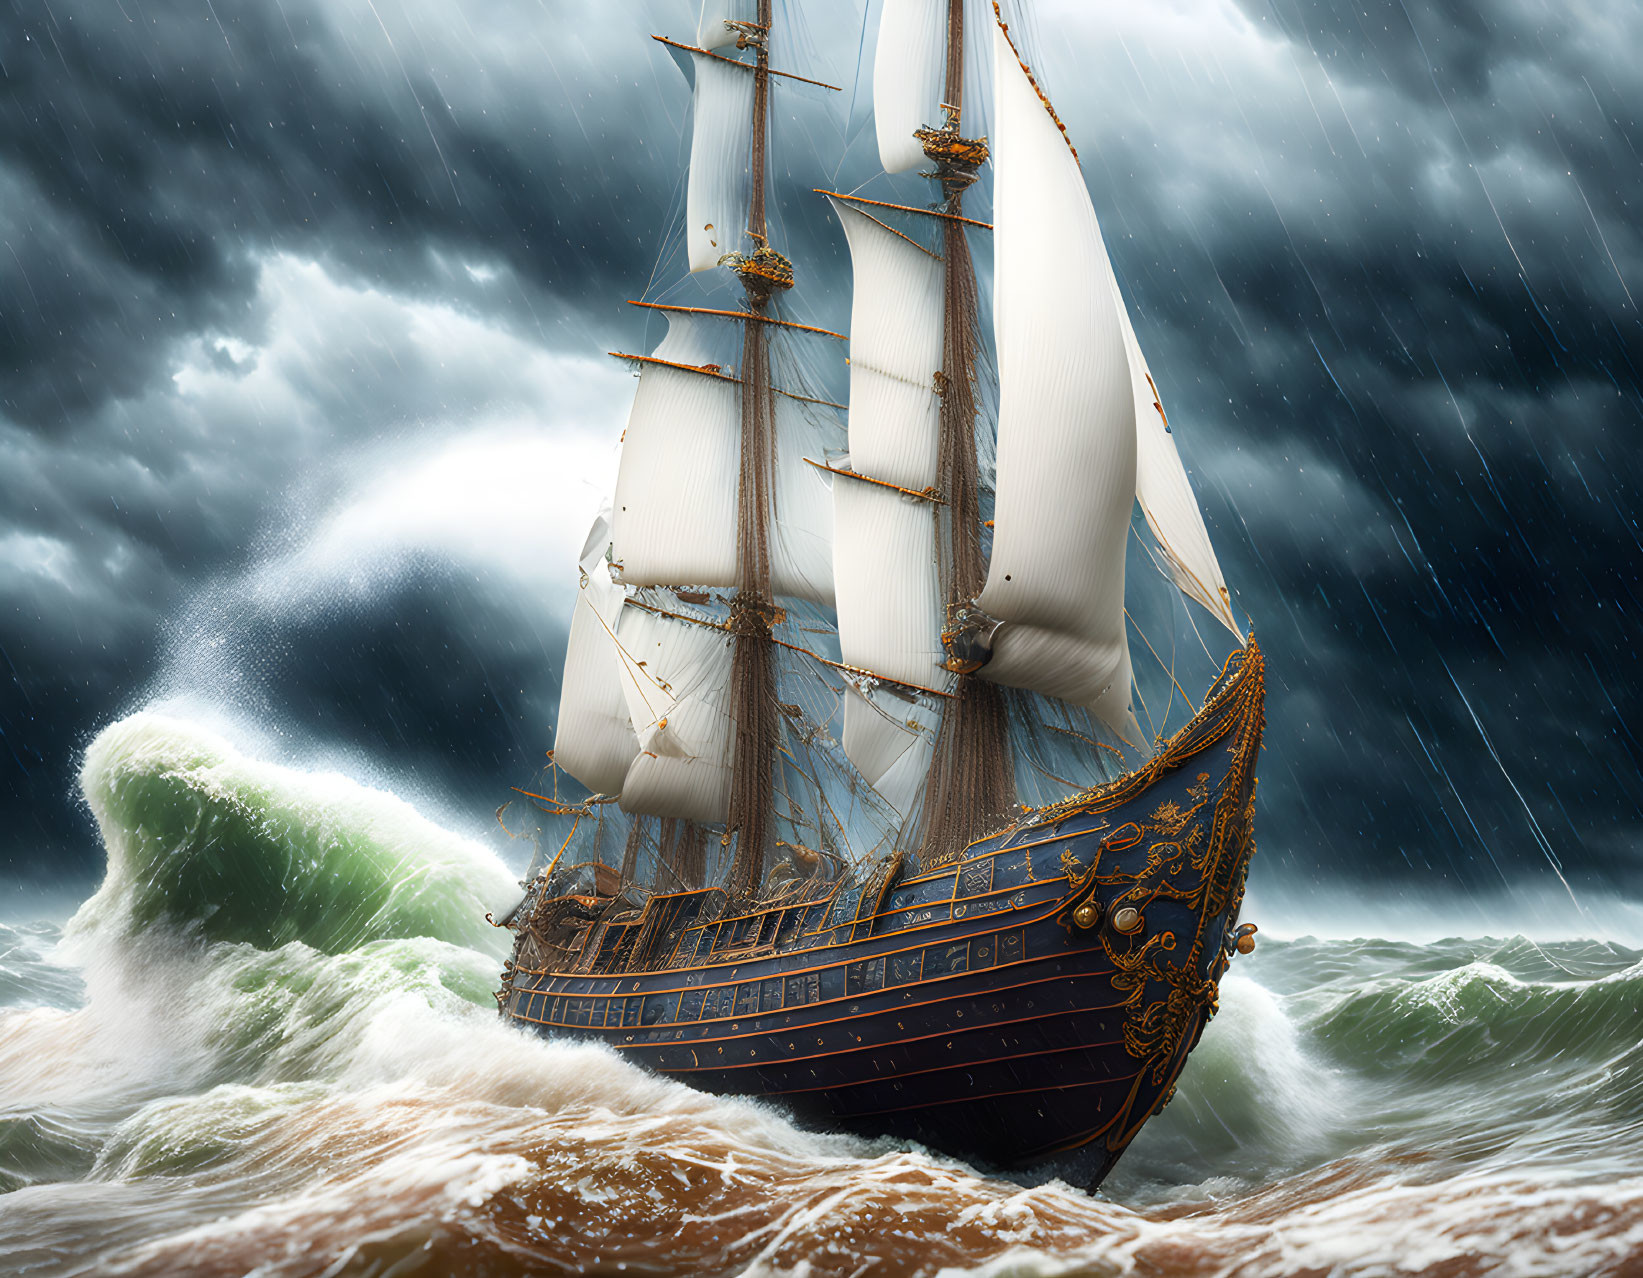 Tall ship sailing through stormy seas